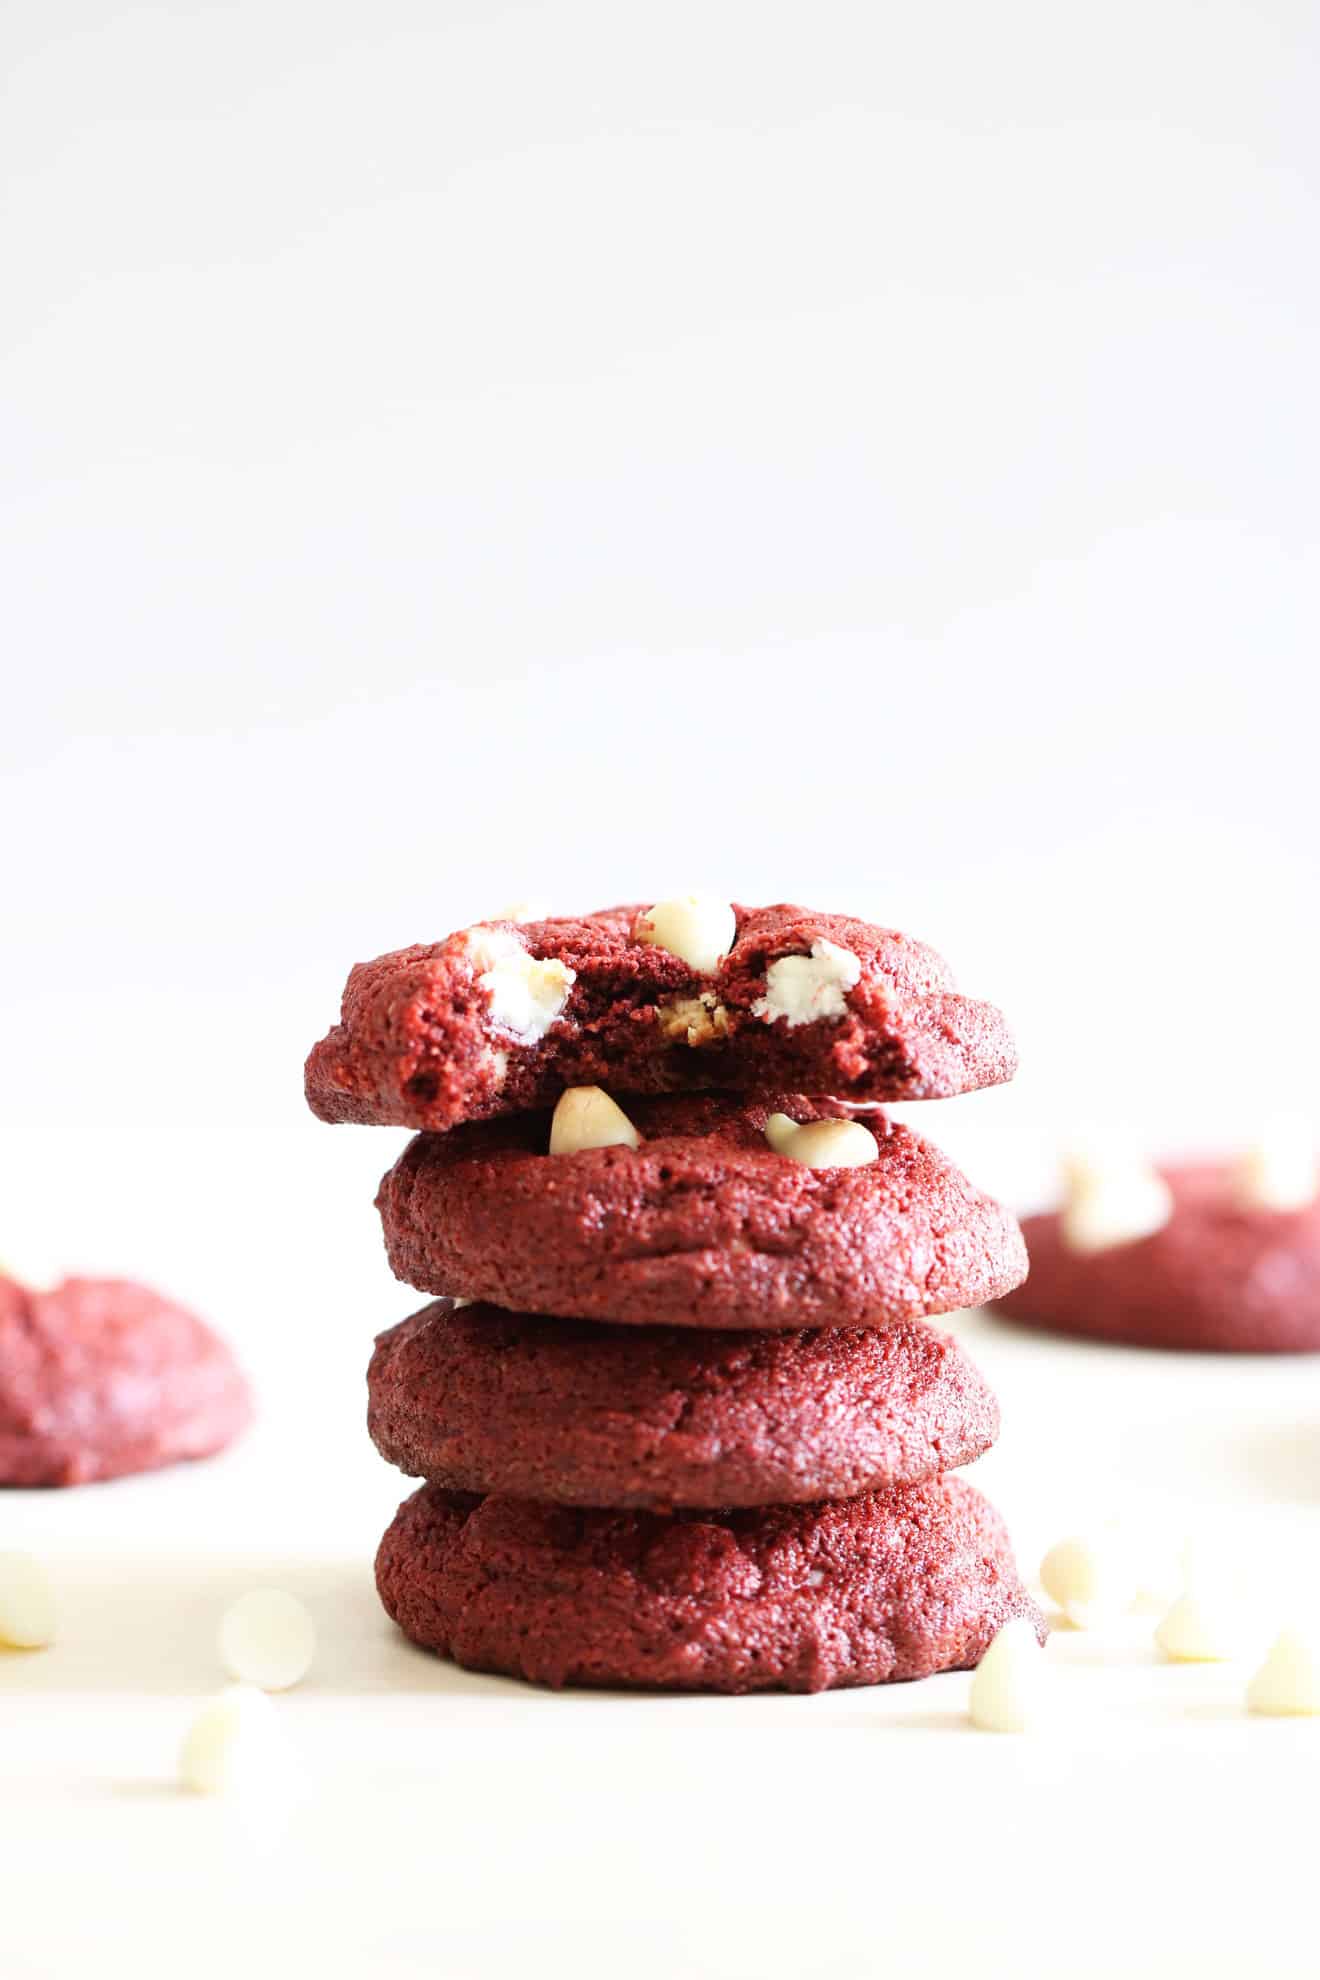 Red Velvet White Chocolate Chip Cookies